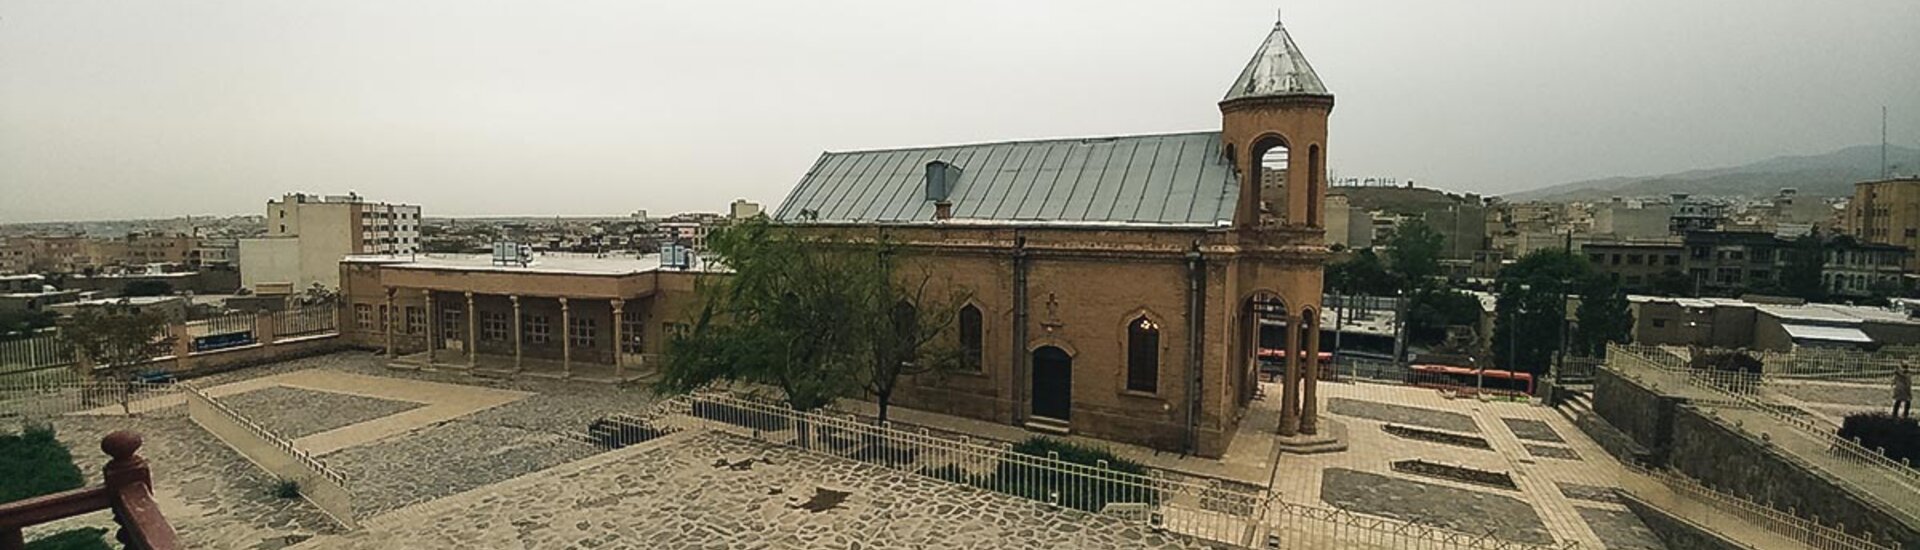 Stephen Gregory Church in Hamedan